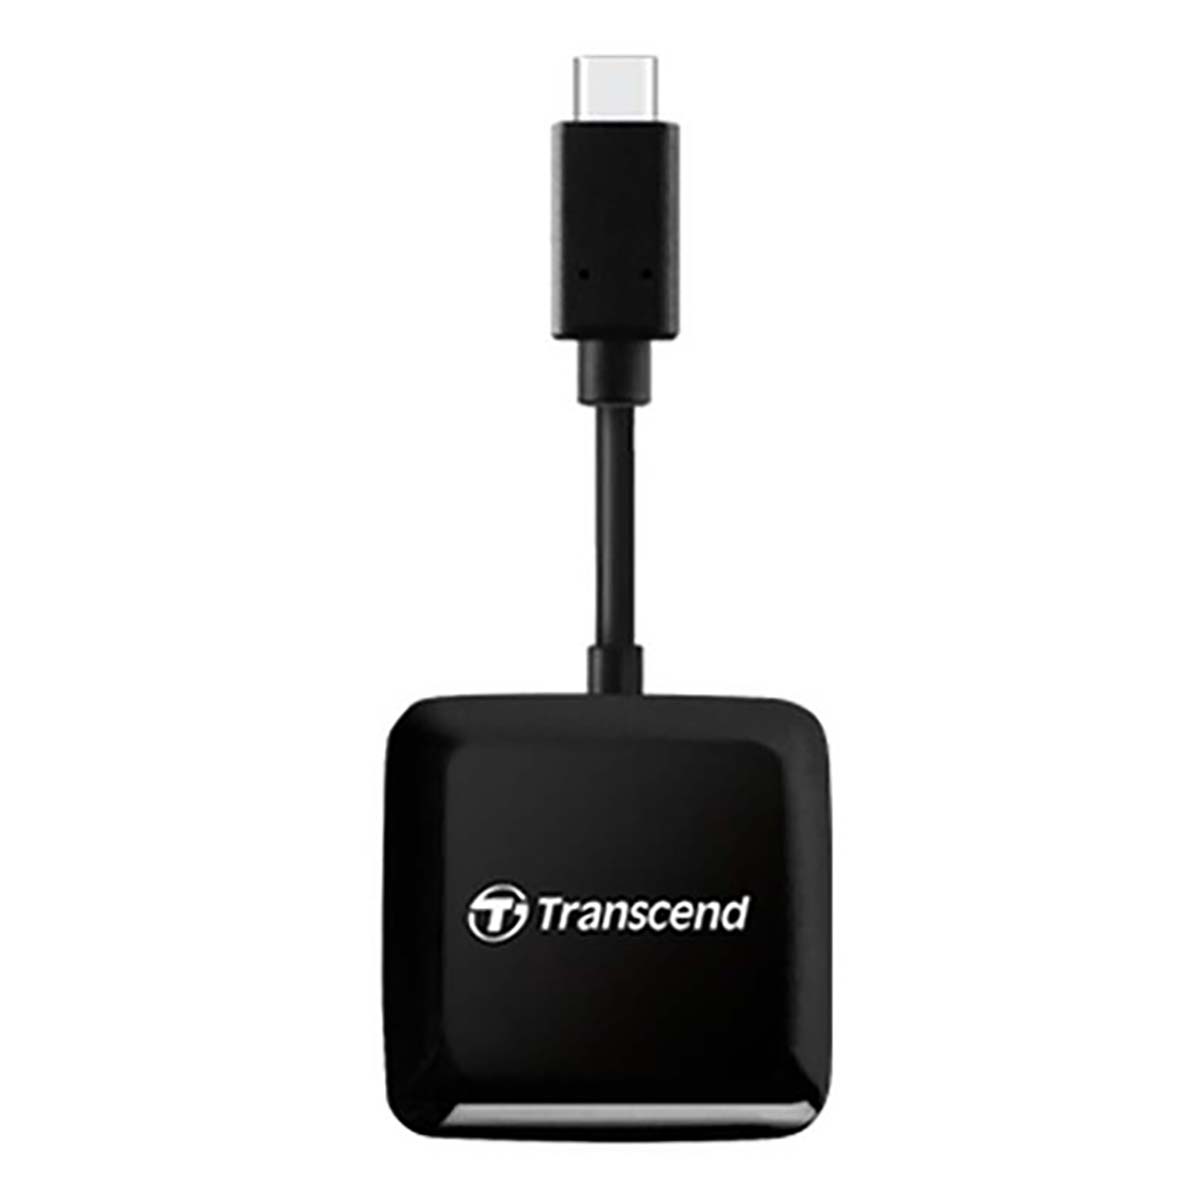 Transcend SD/microSD Card Reader Type C USB 3.2 